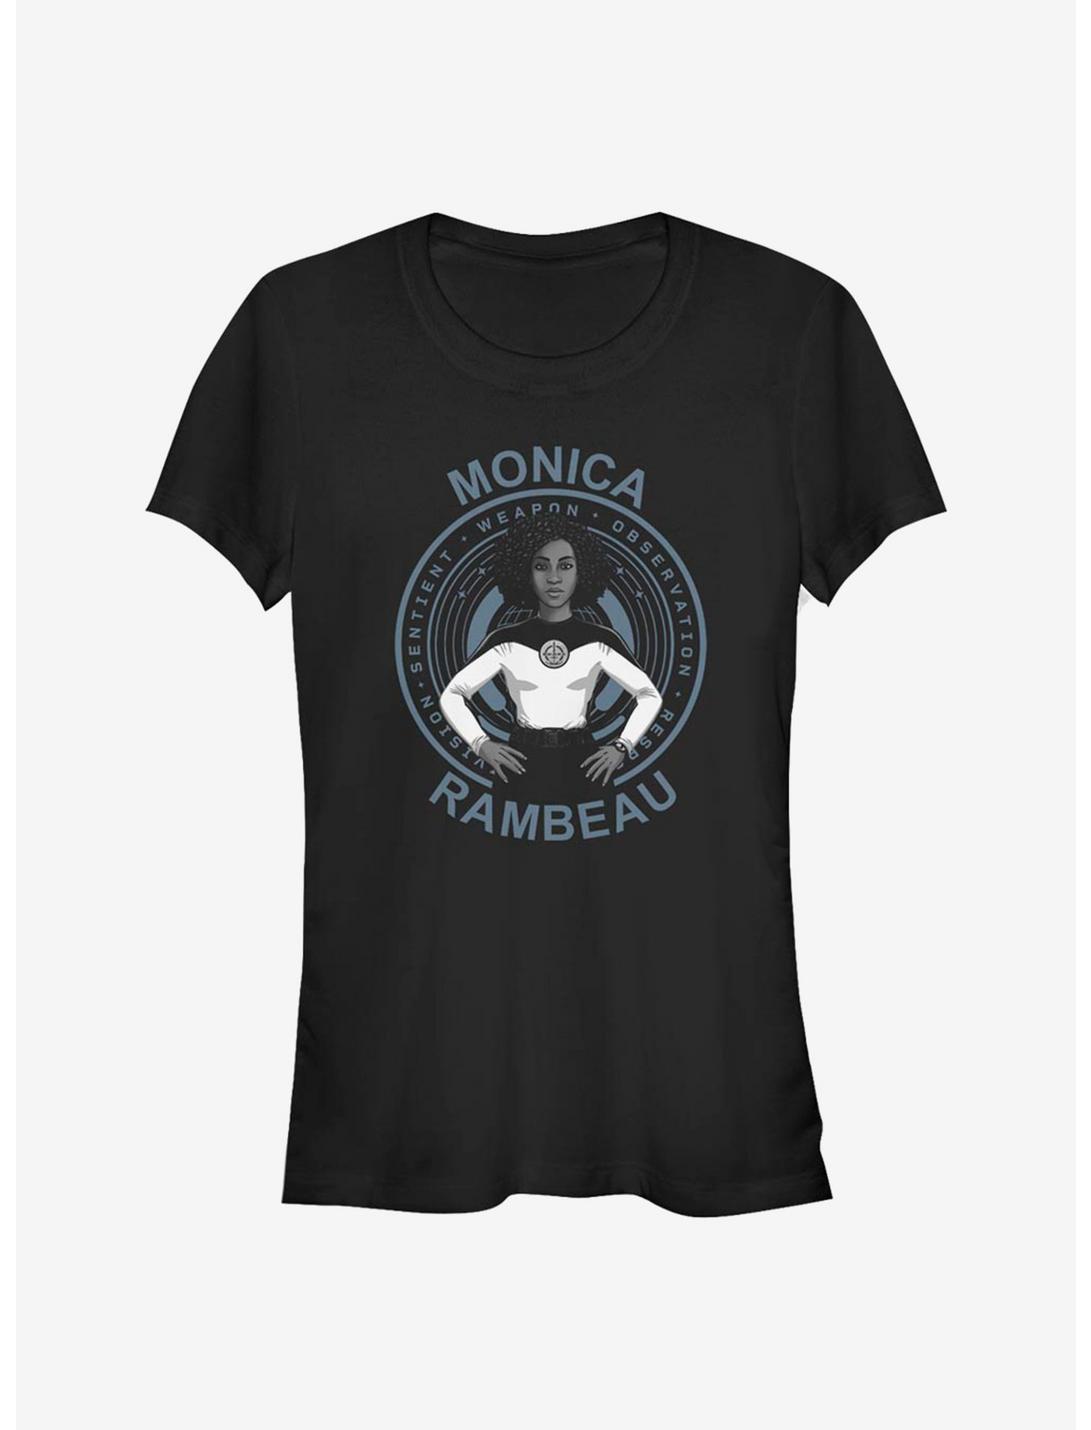 Marvel WandaVision Heroic Rambeau Girls T-Shirt, BLACK, hi-res